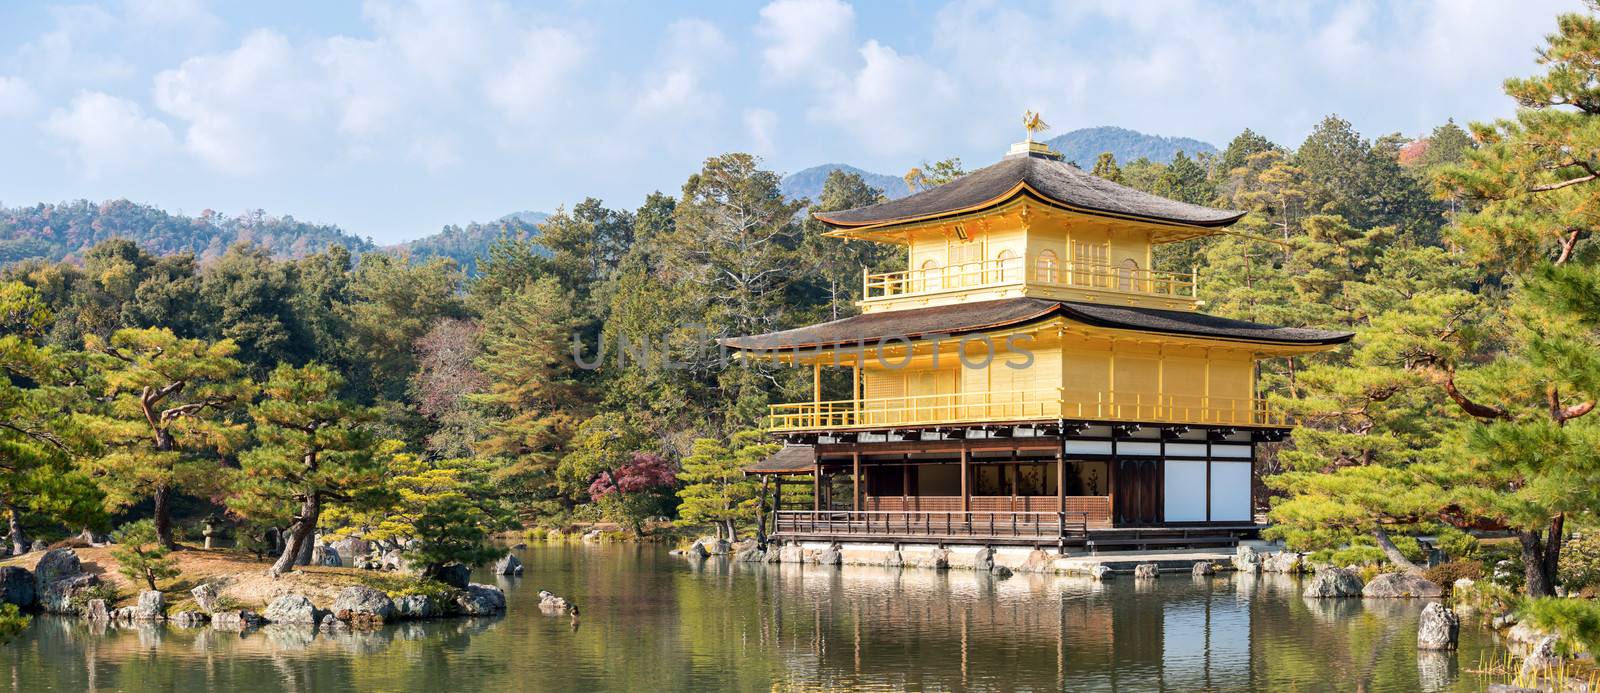 Panorama landscape of Golden Pavilion Kinkakuji Temple in Kyoto Japan